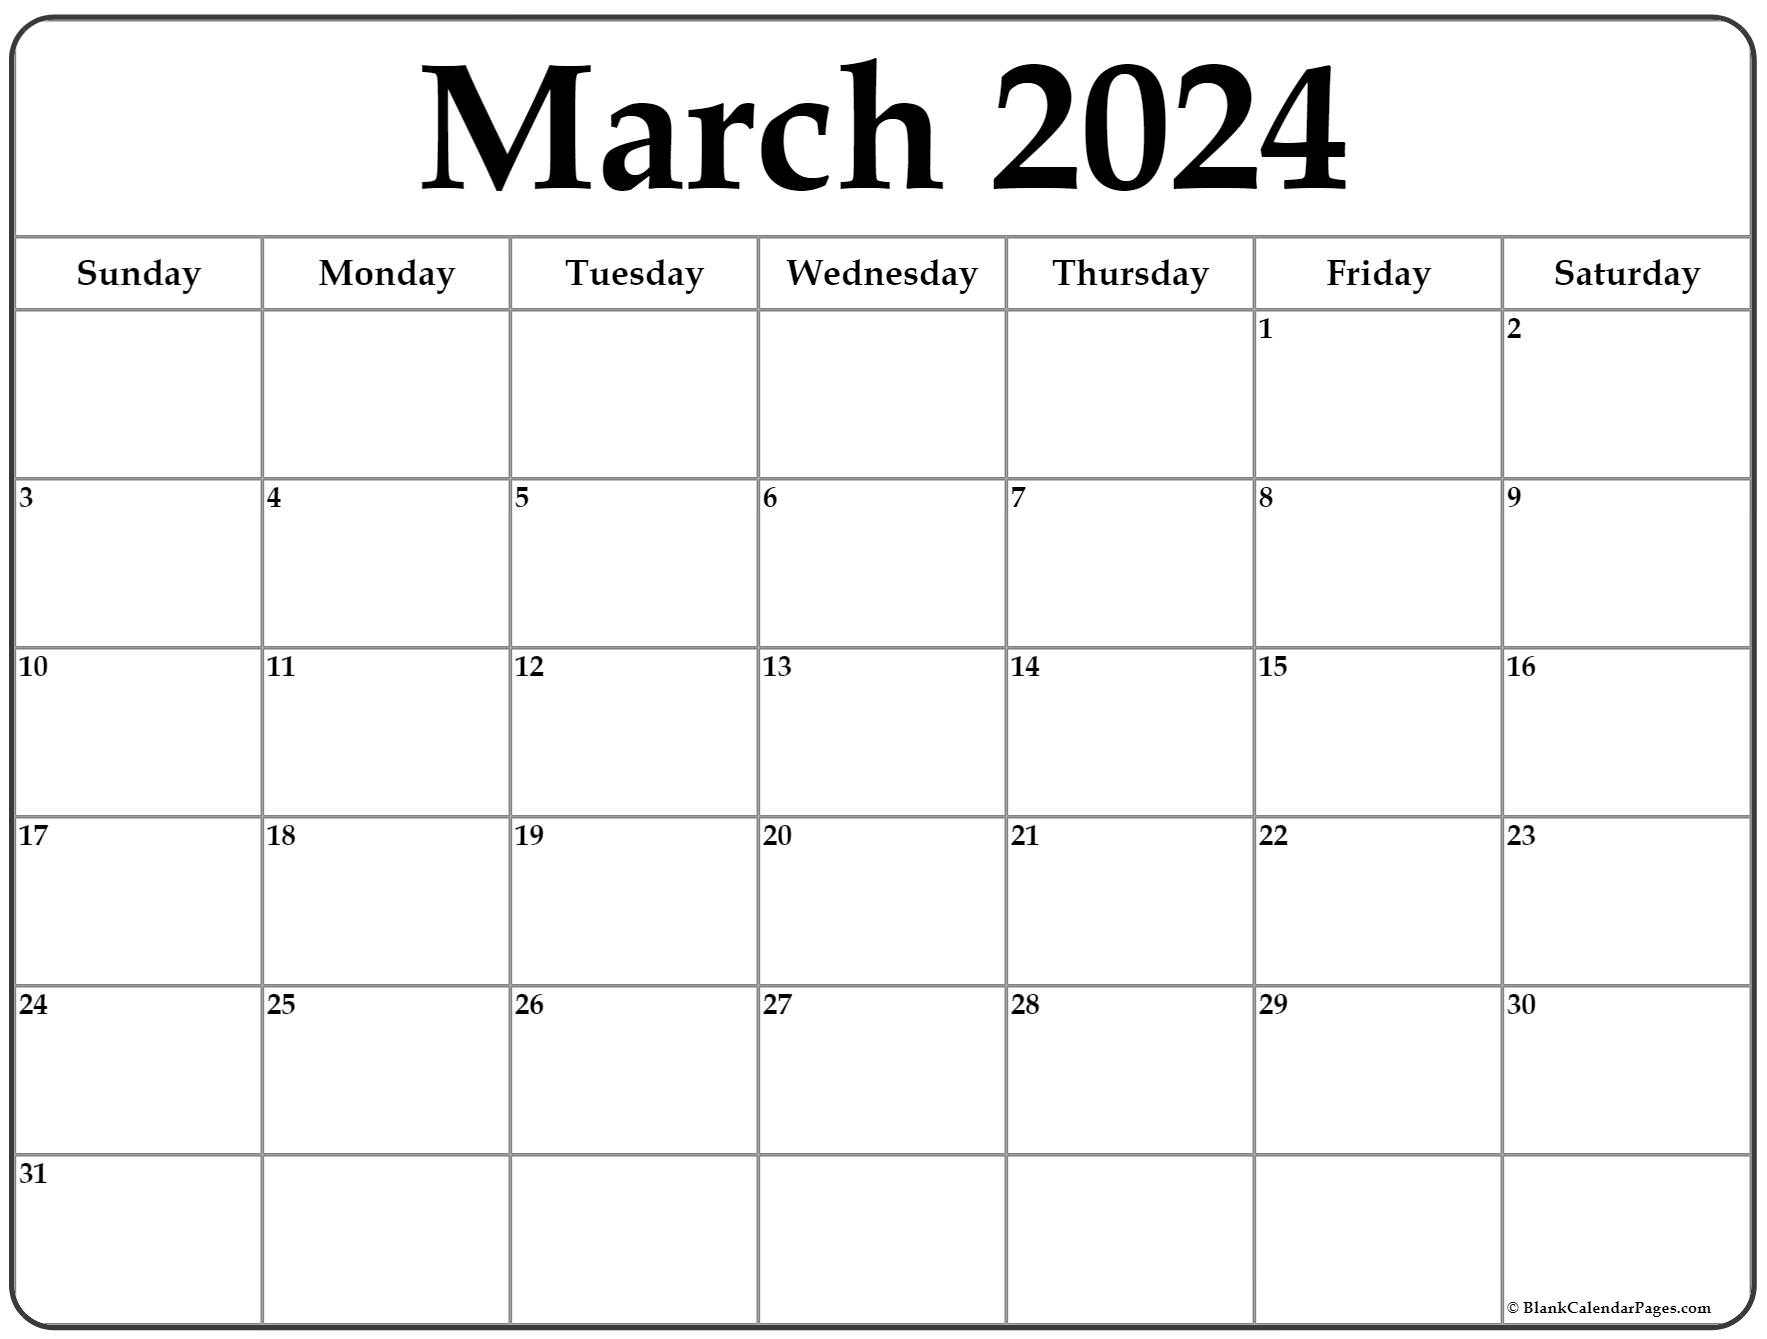 March Calendar 2022 Template March 2022 Calendar | Free Printable Calendar Templates